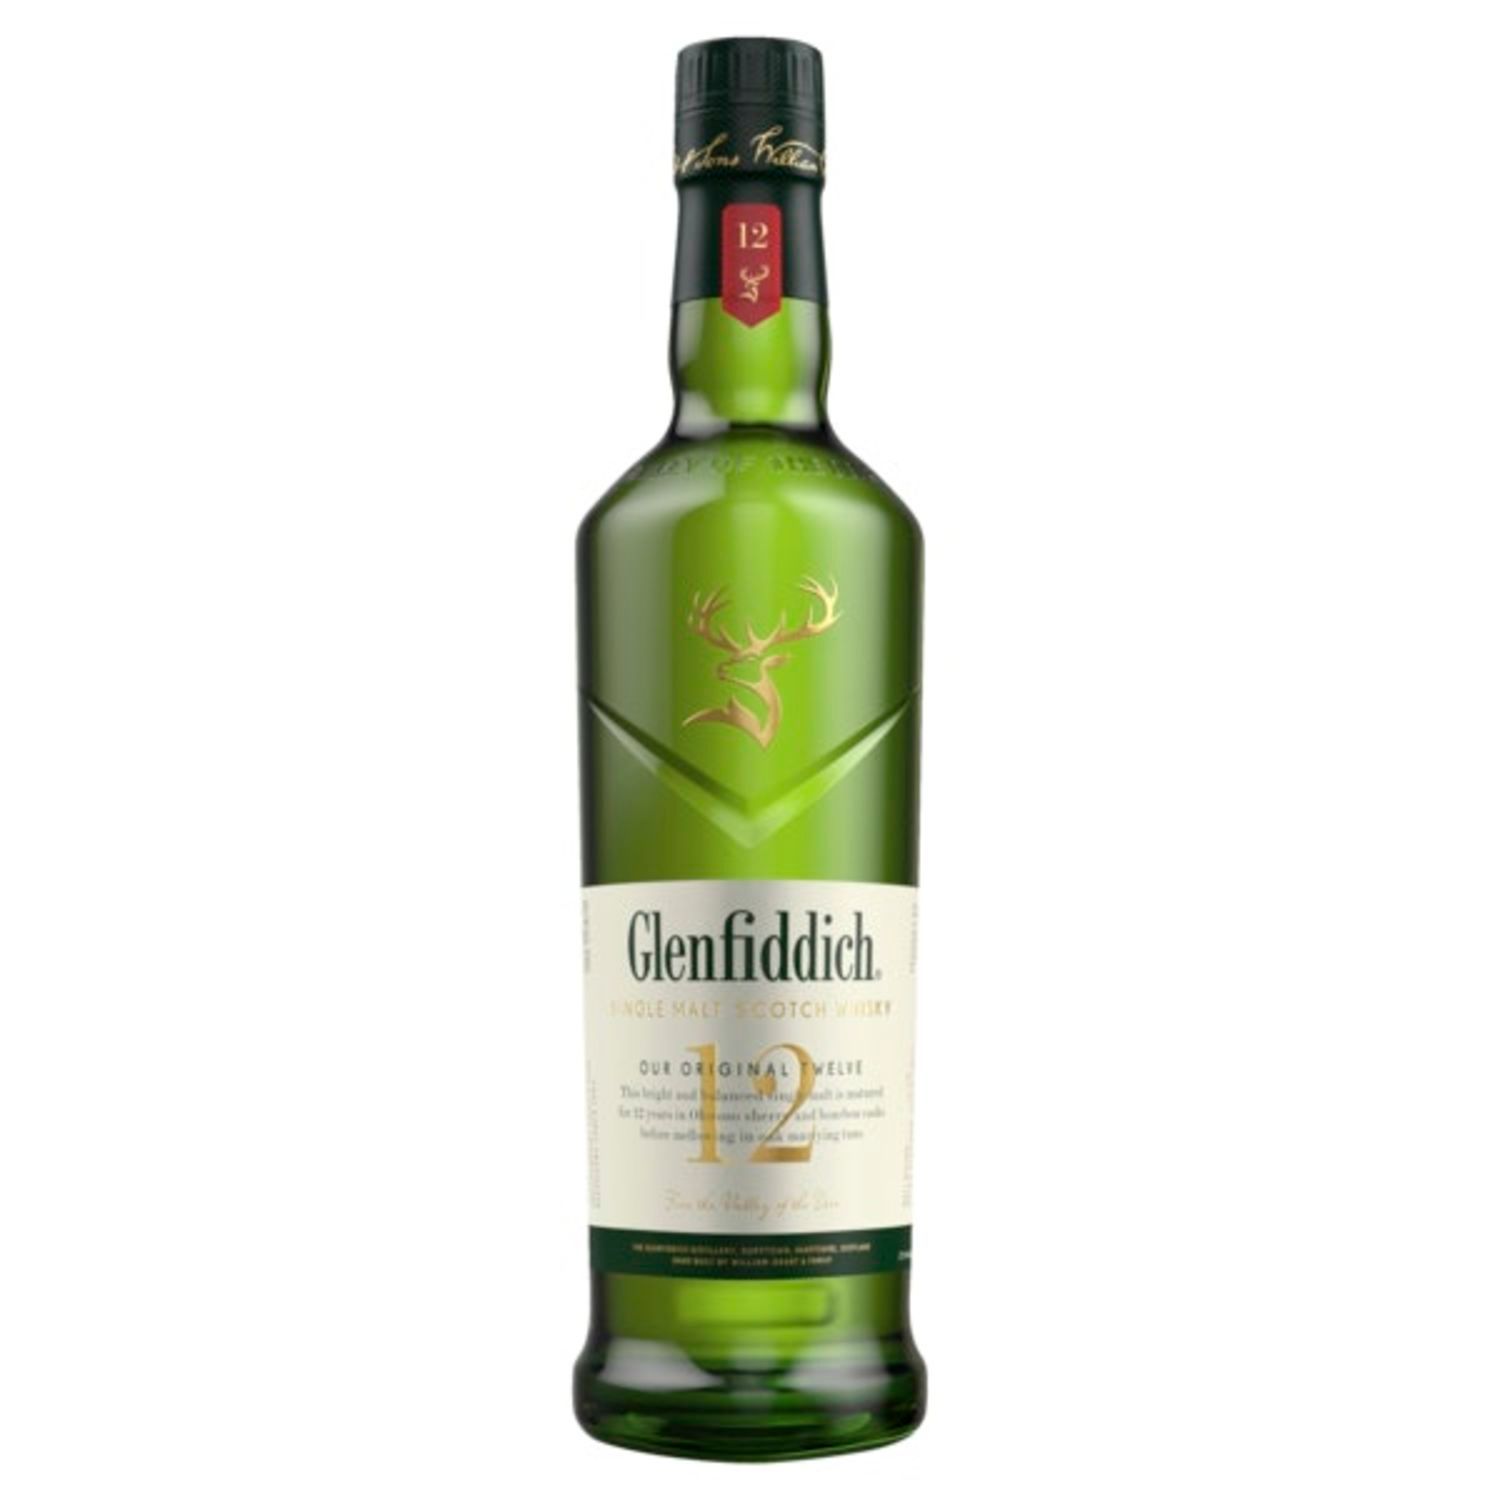 Glenfiddich 12 Year Old Single Malt Scotch Whisky 700mL Bottle